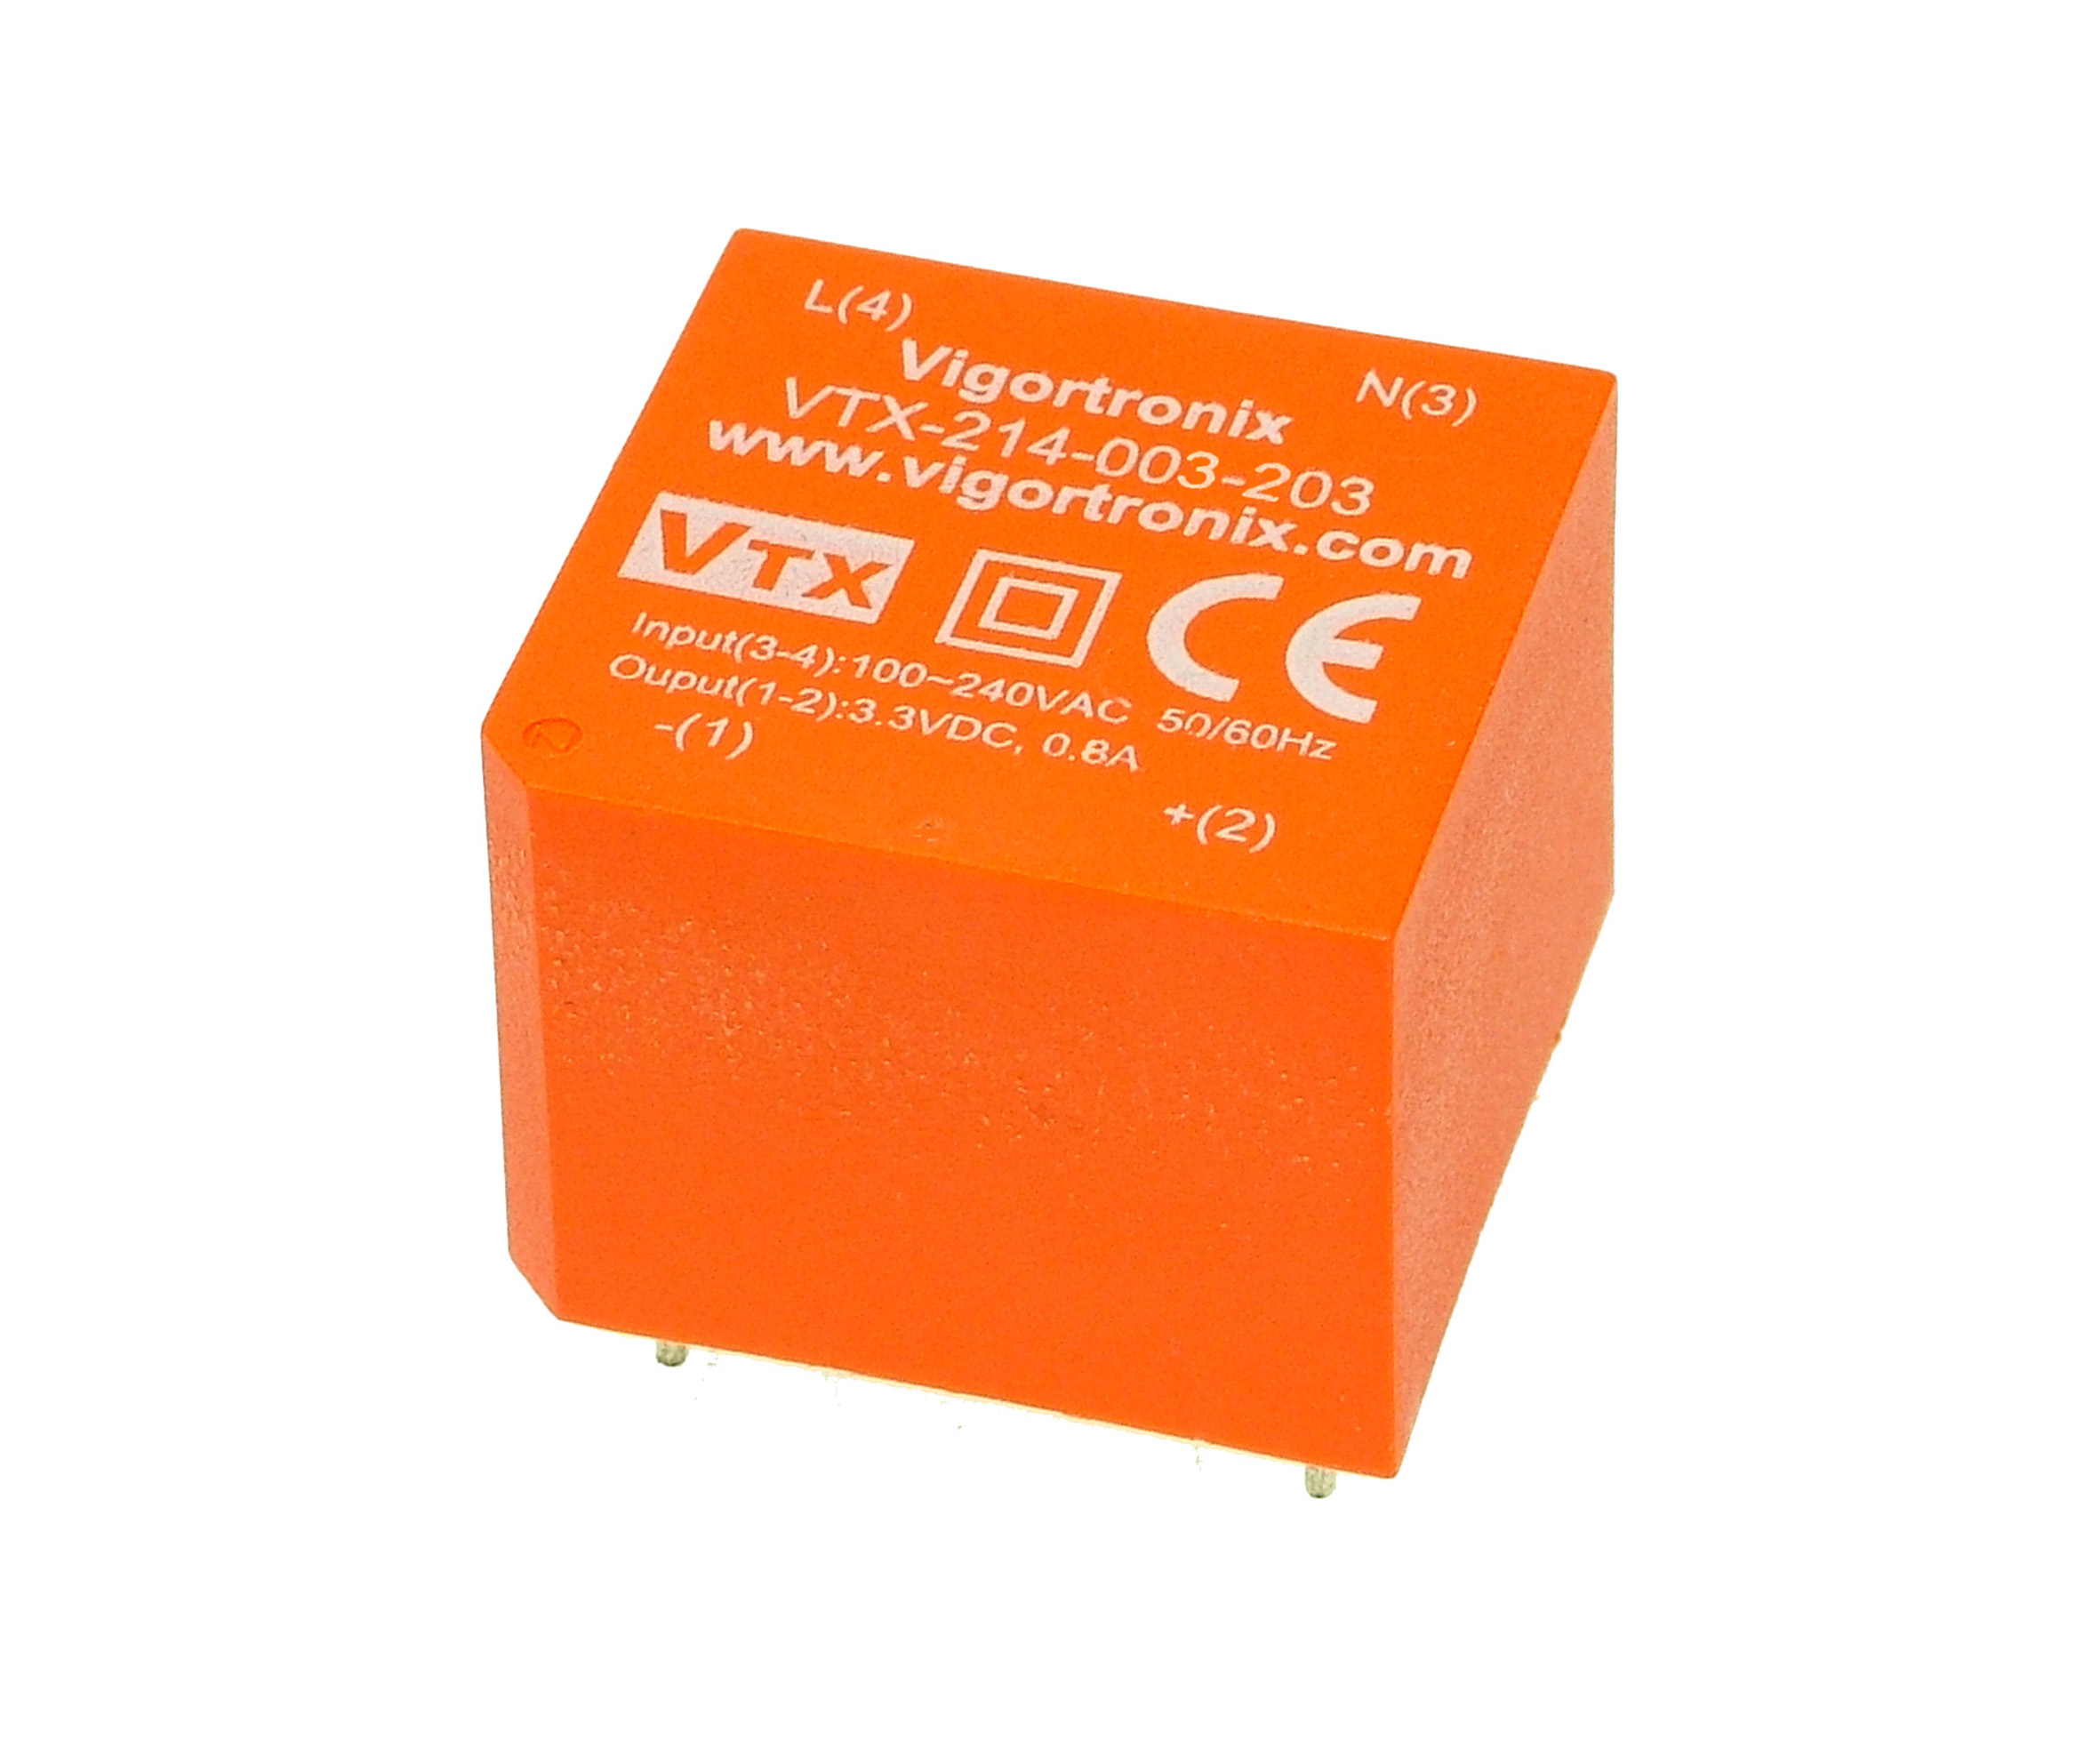 Vigortronix VTX-214-003-2 Miniature Converter 3W